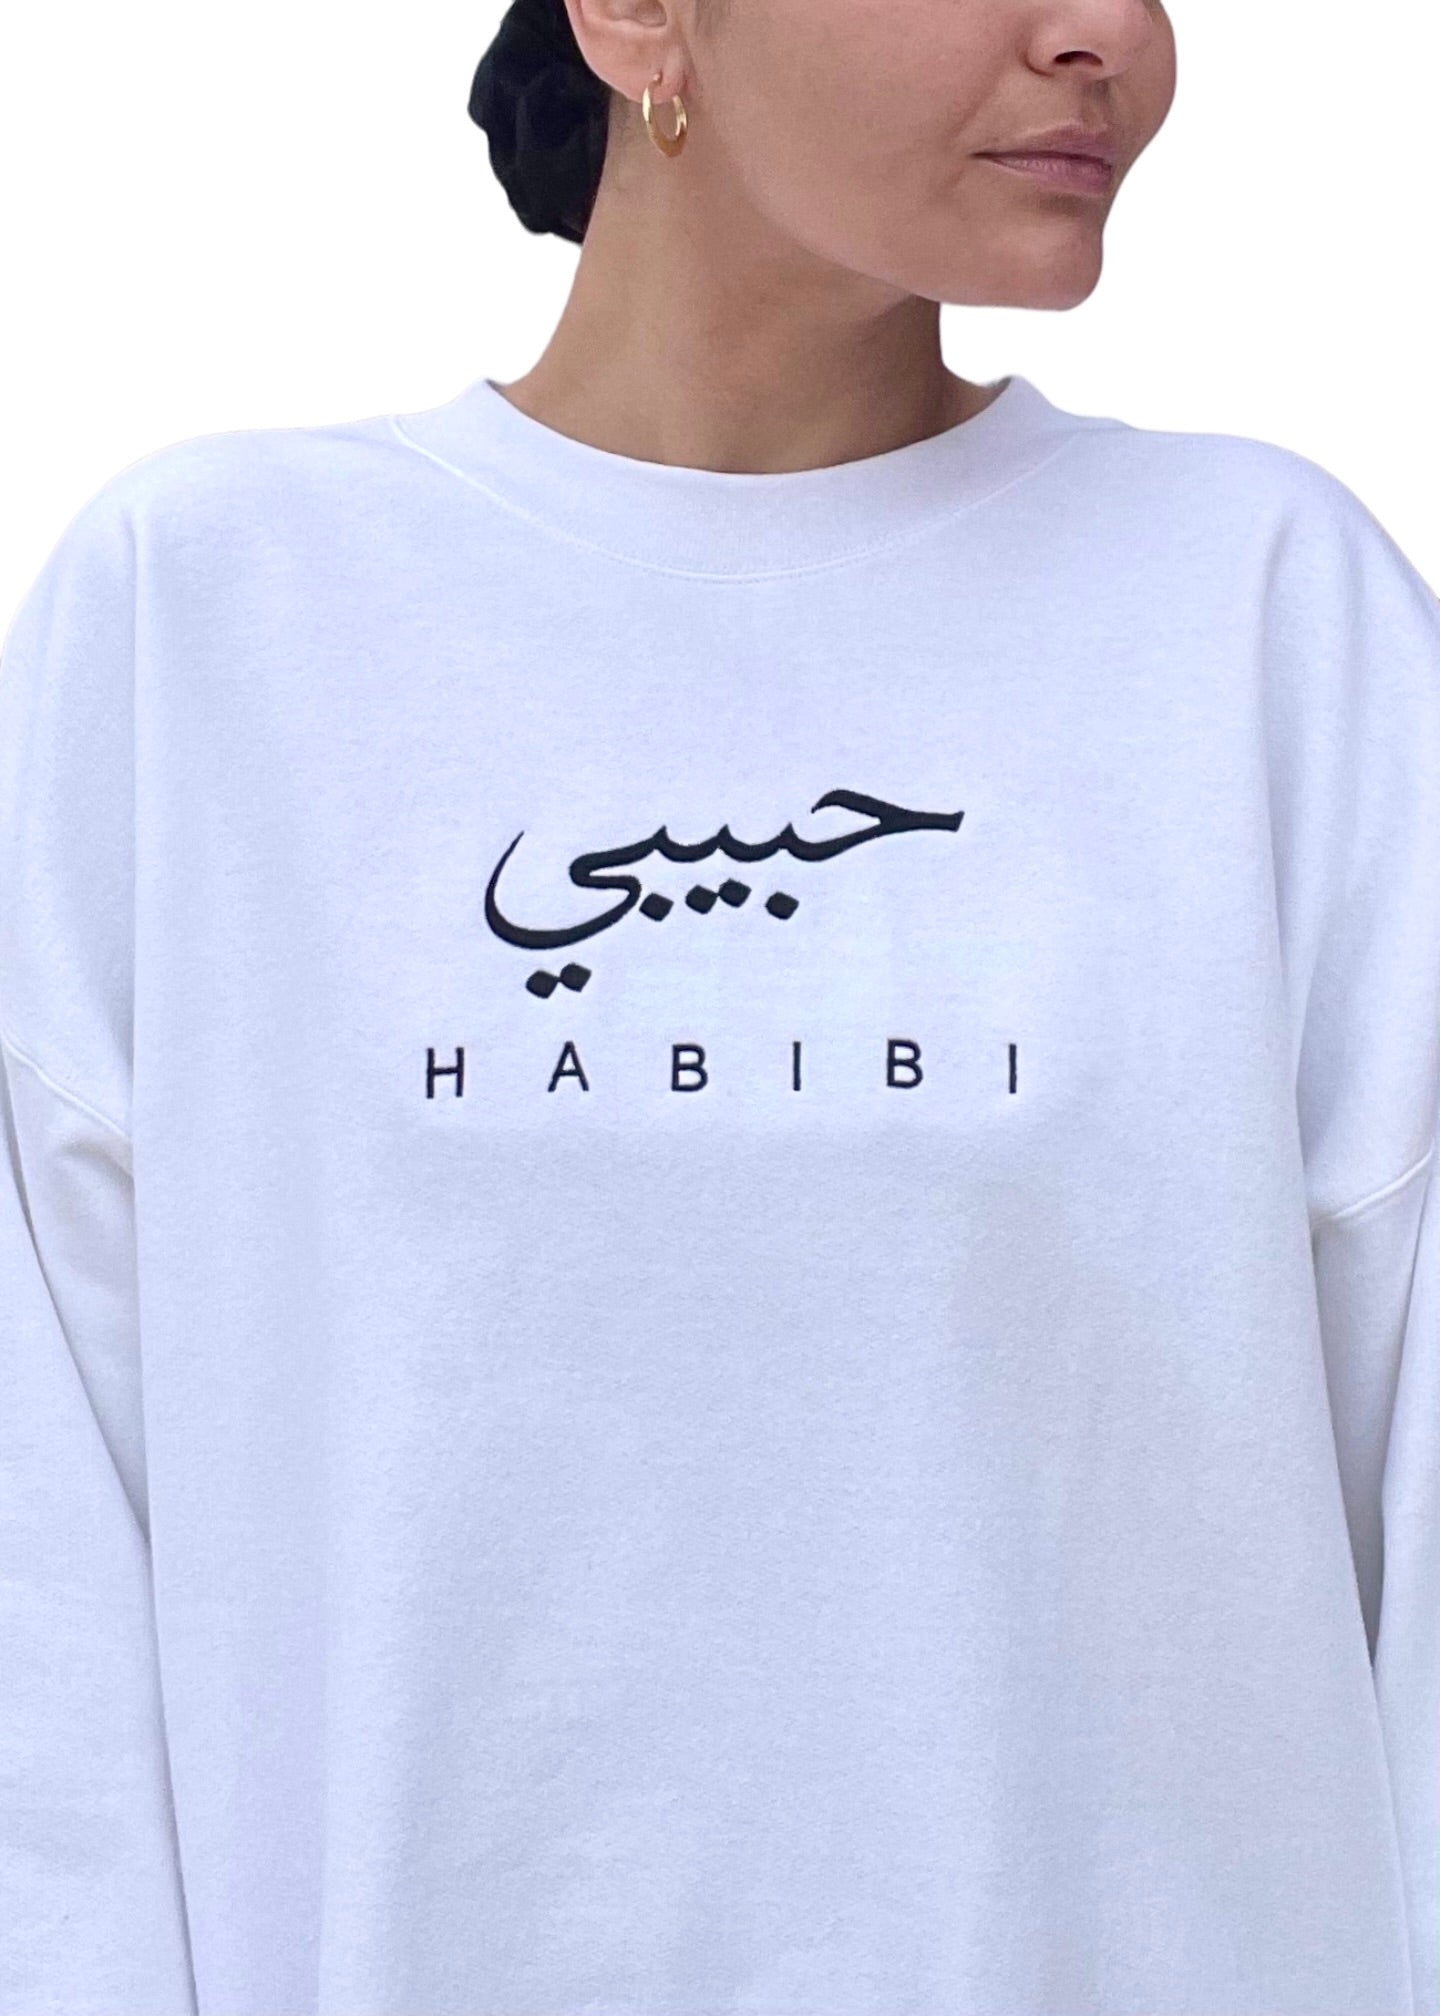 [READY TO SHIP] Embroidered Habibi Sweatshirt